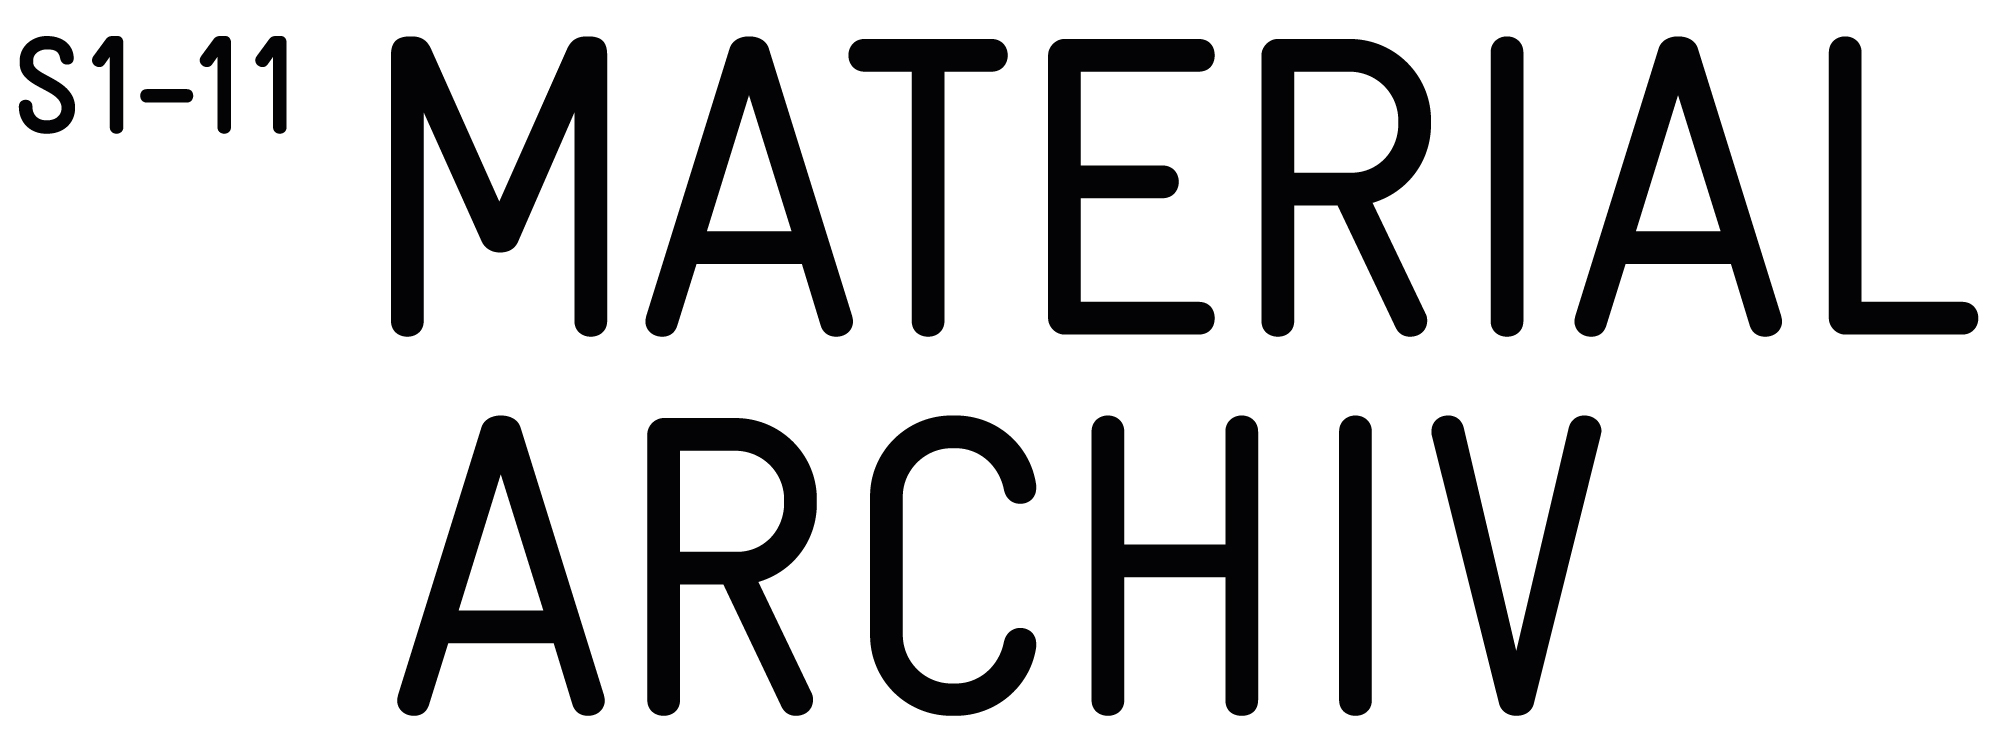 Materialarchiv-logo-s1-11.jpg